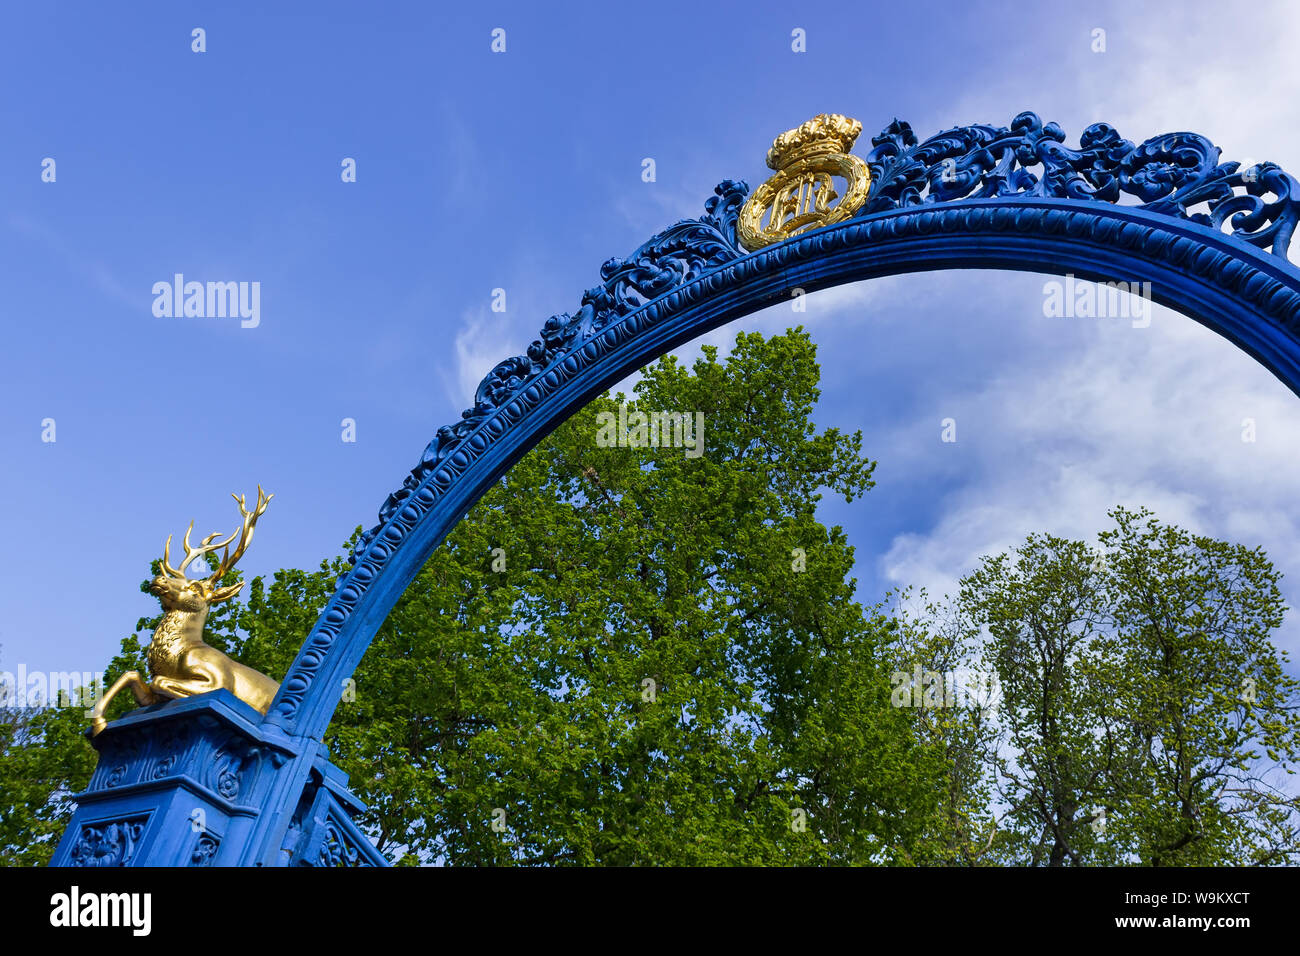 Bla Porten (Swedish for) Blue Gate. Gate entrance with decorative sculpture elements leading to Lusthusporten park. Djurgarden island, Skansen, Sweden Stock Photo